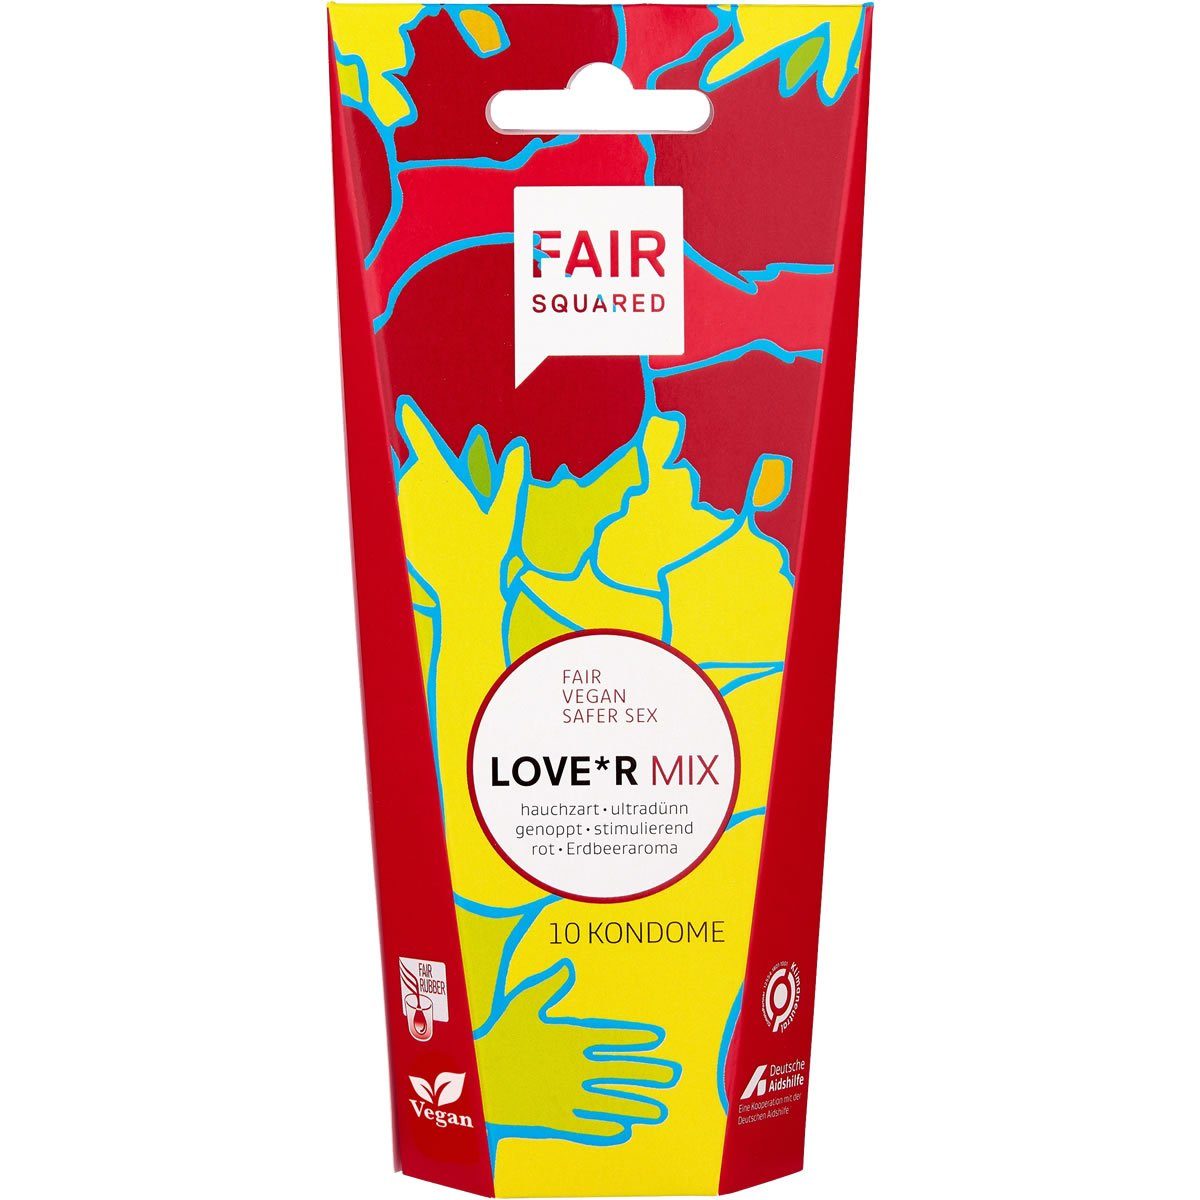 Fair Squared Kondome Celebrate your Love - Love*r Mix Packung mit, 10 St., vegane Fair-Trade-Kondome im Sortiment